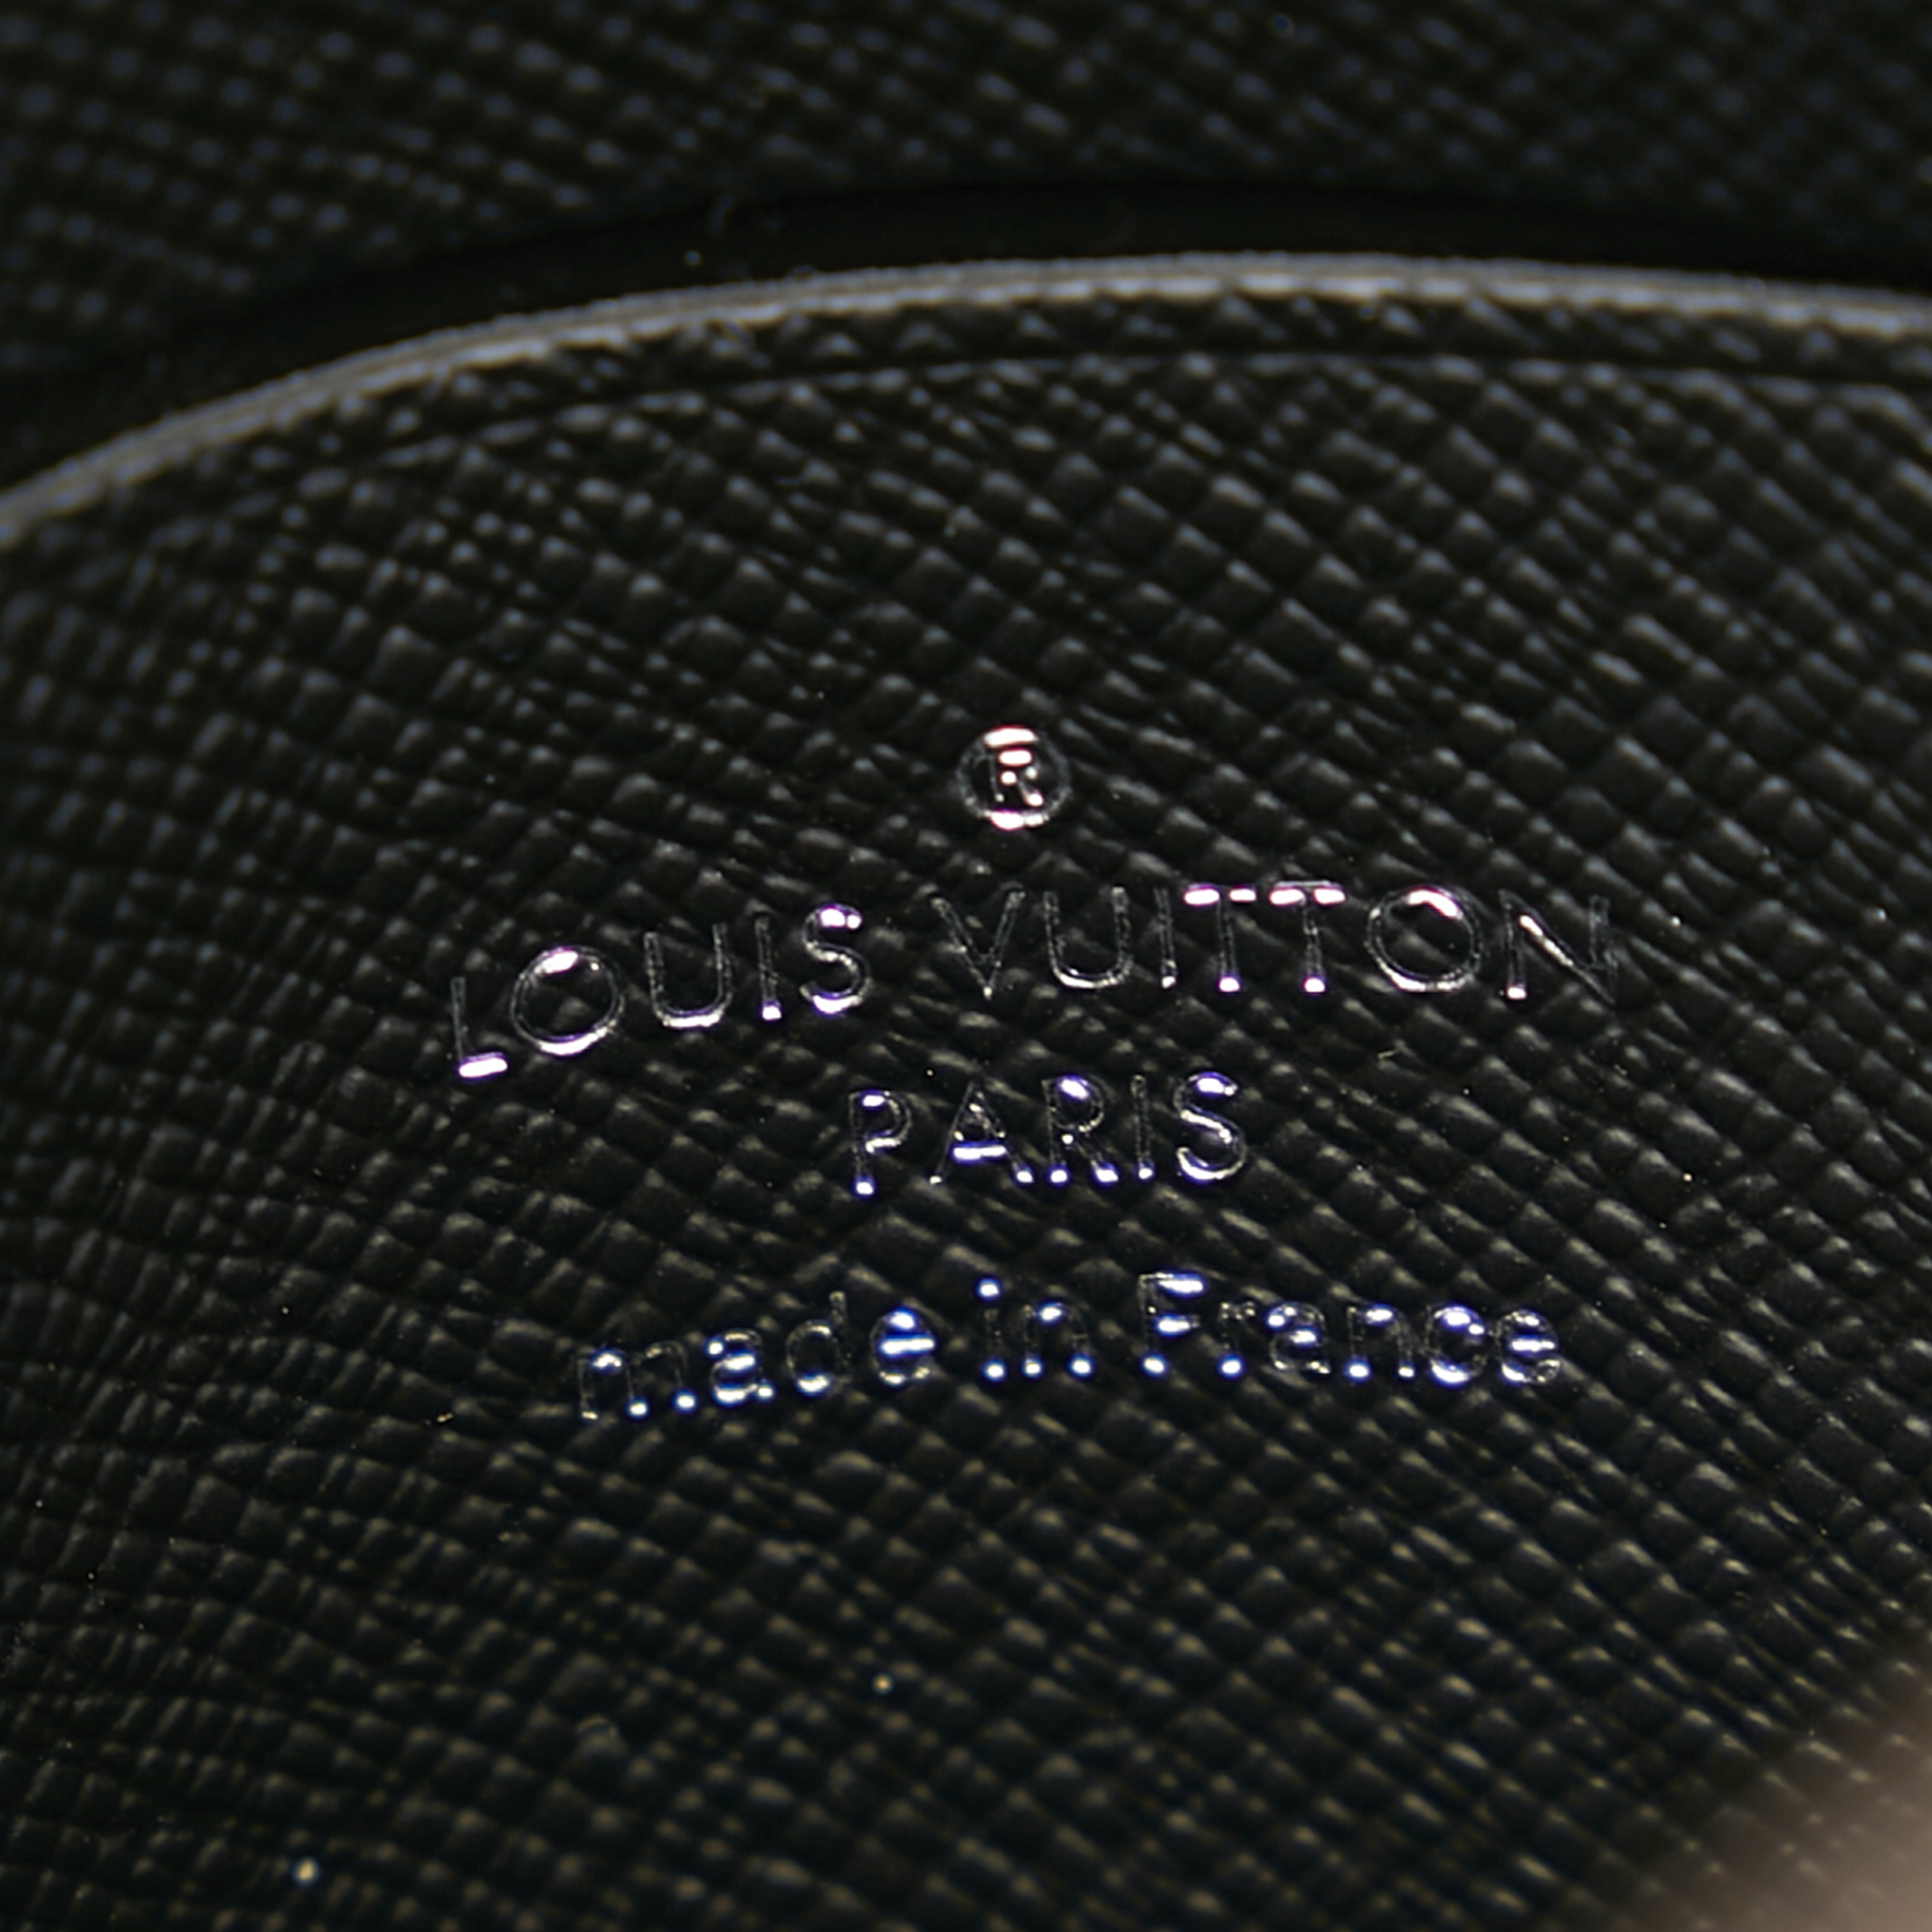 Louis Vuitton Brown Monogram Macassar Christopher Wearable